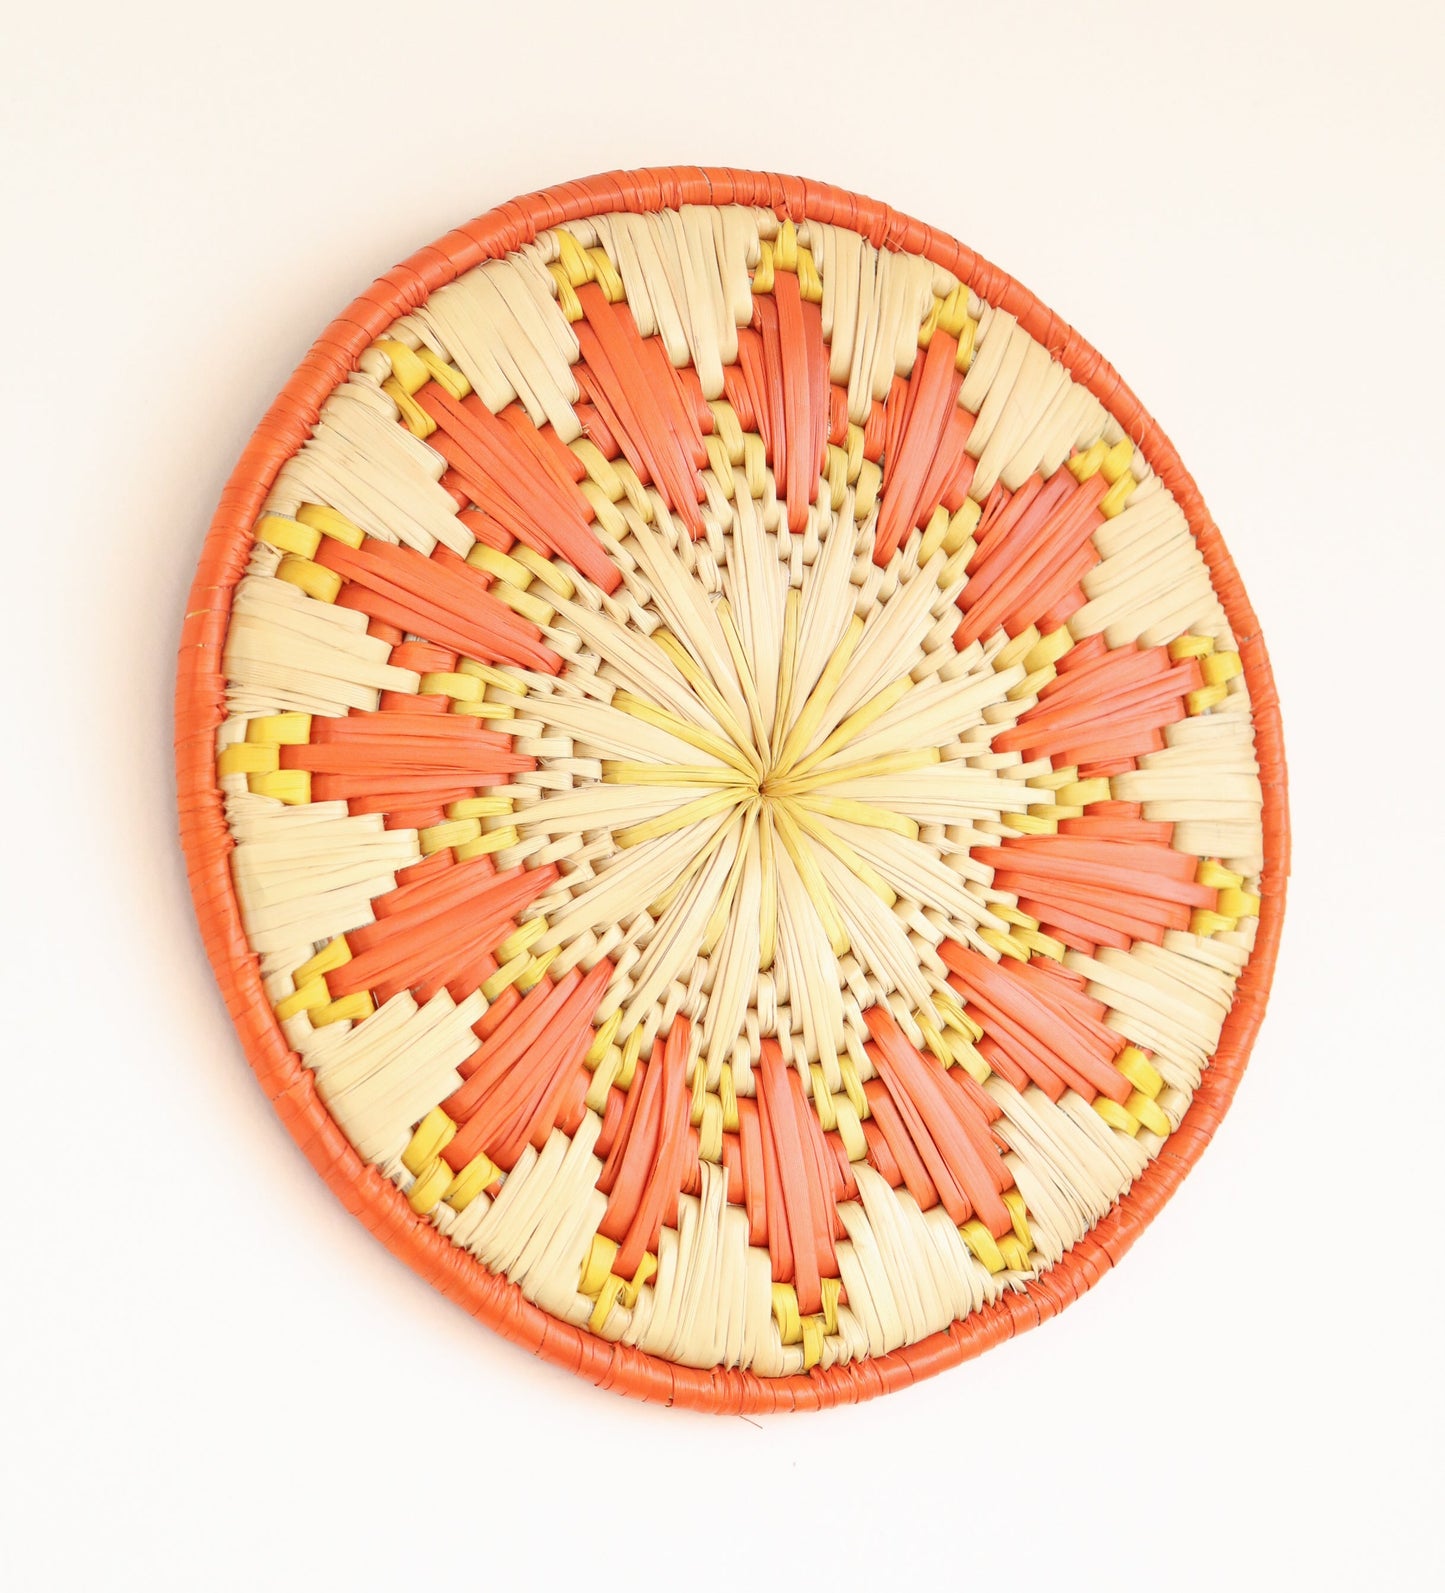 Decorative wall plates - Moonj grass basket - Wall basket for decor - Handwoven grass plate